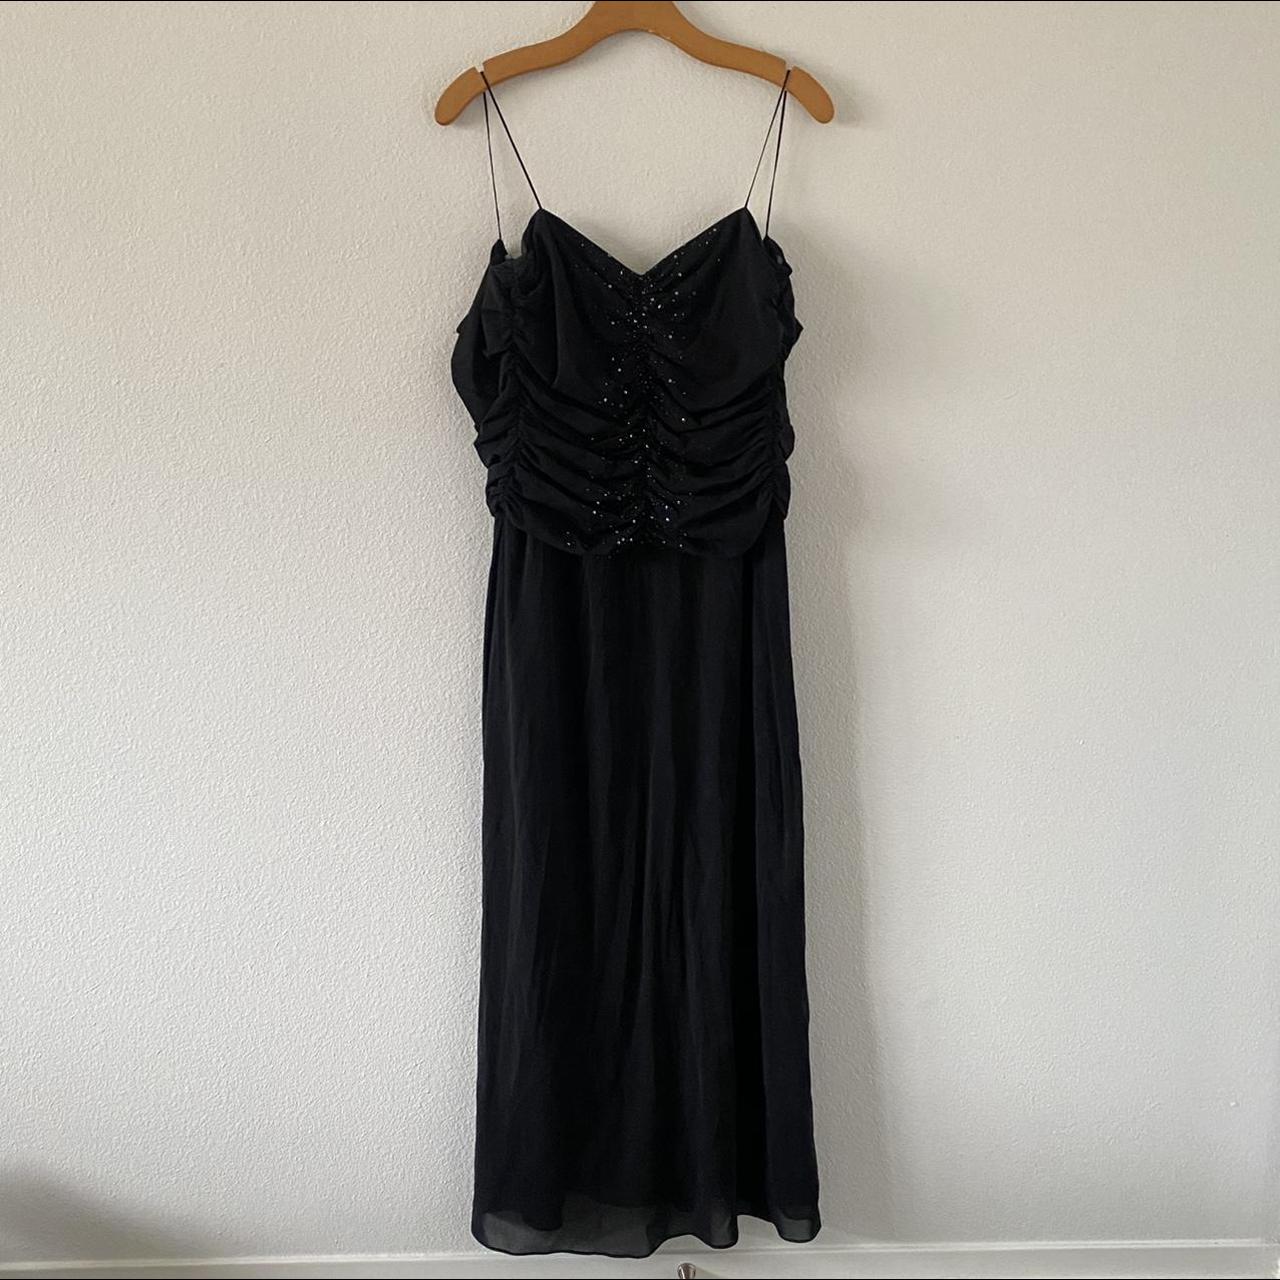 Laundry by Shelli Segal Women's Black Dress (4)